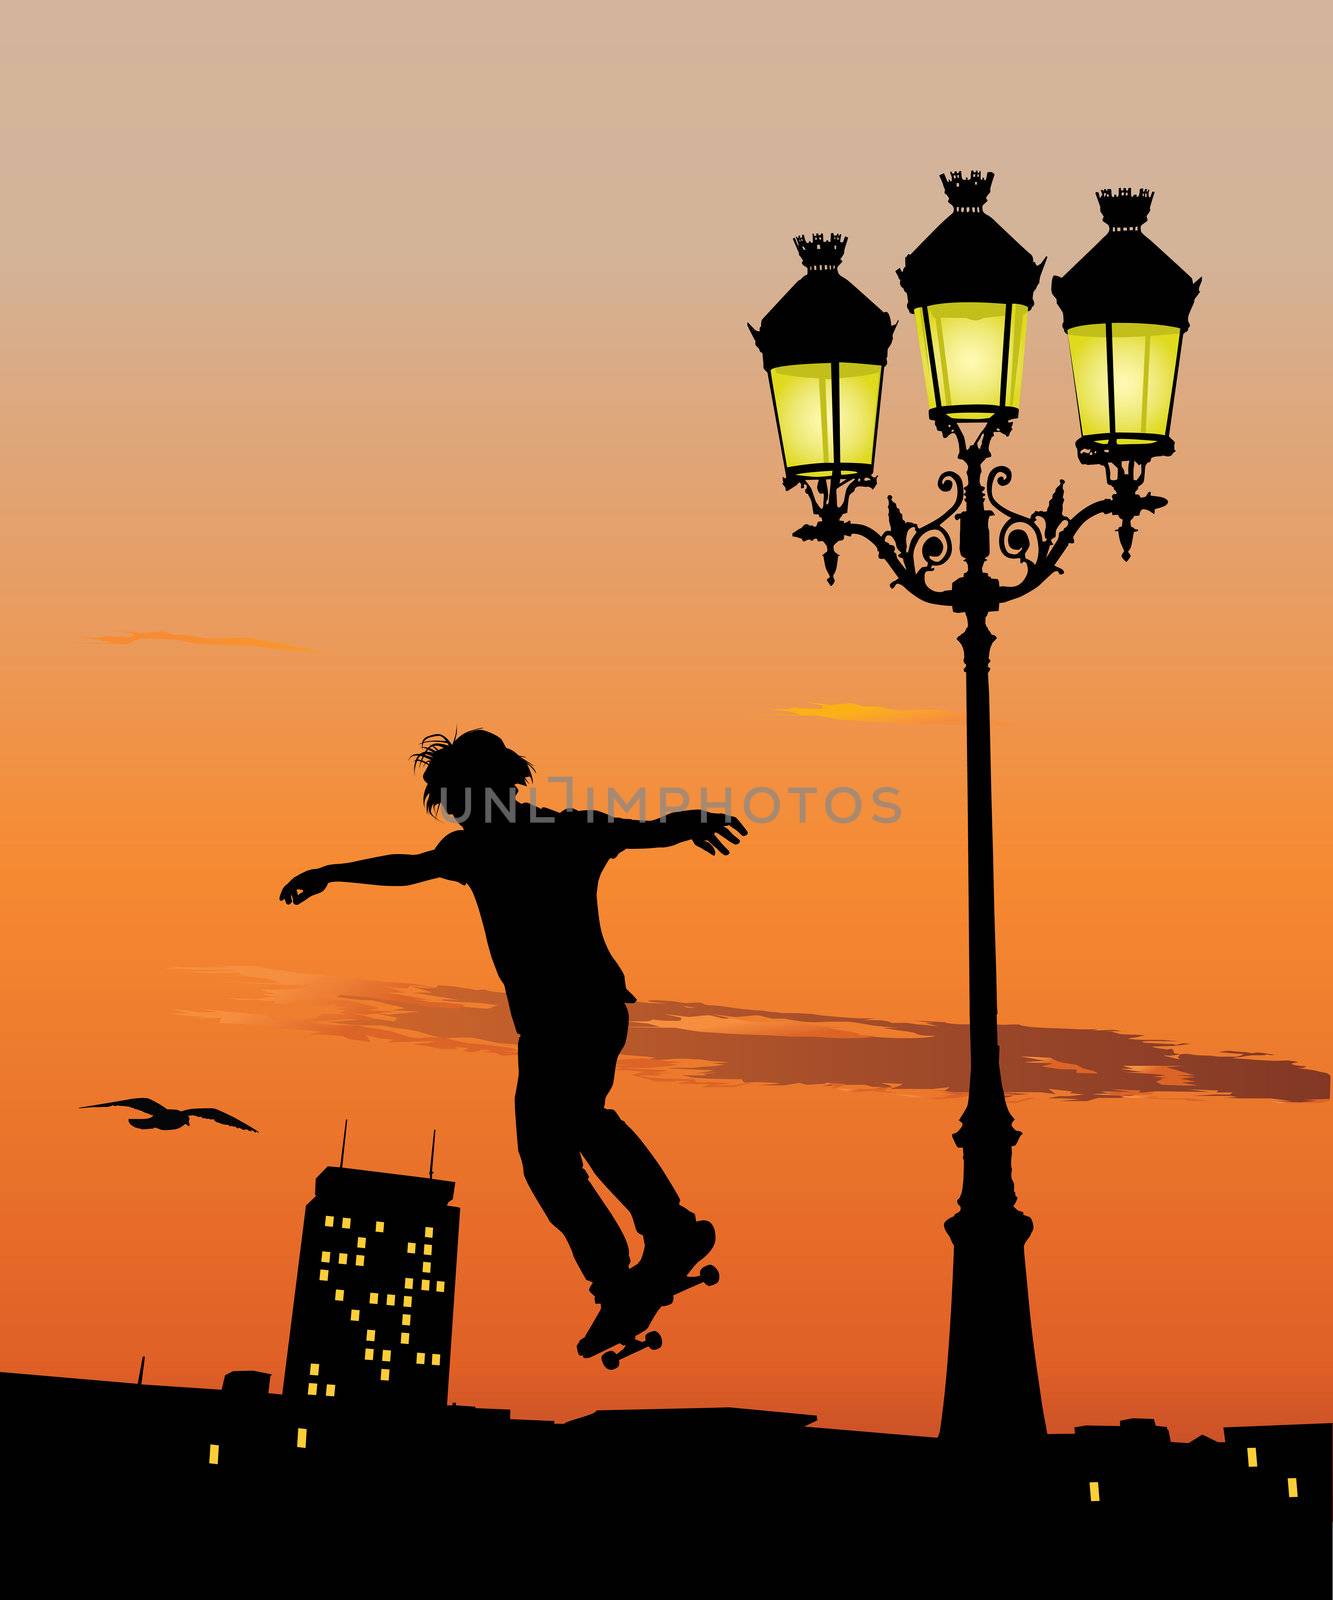 Skateboard jump by ints